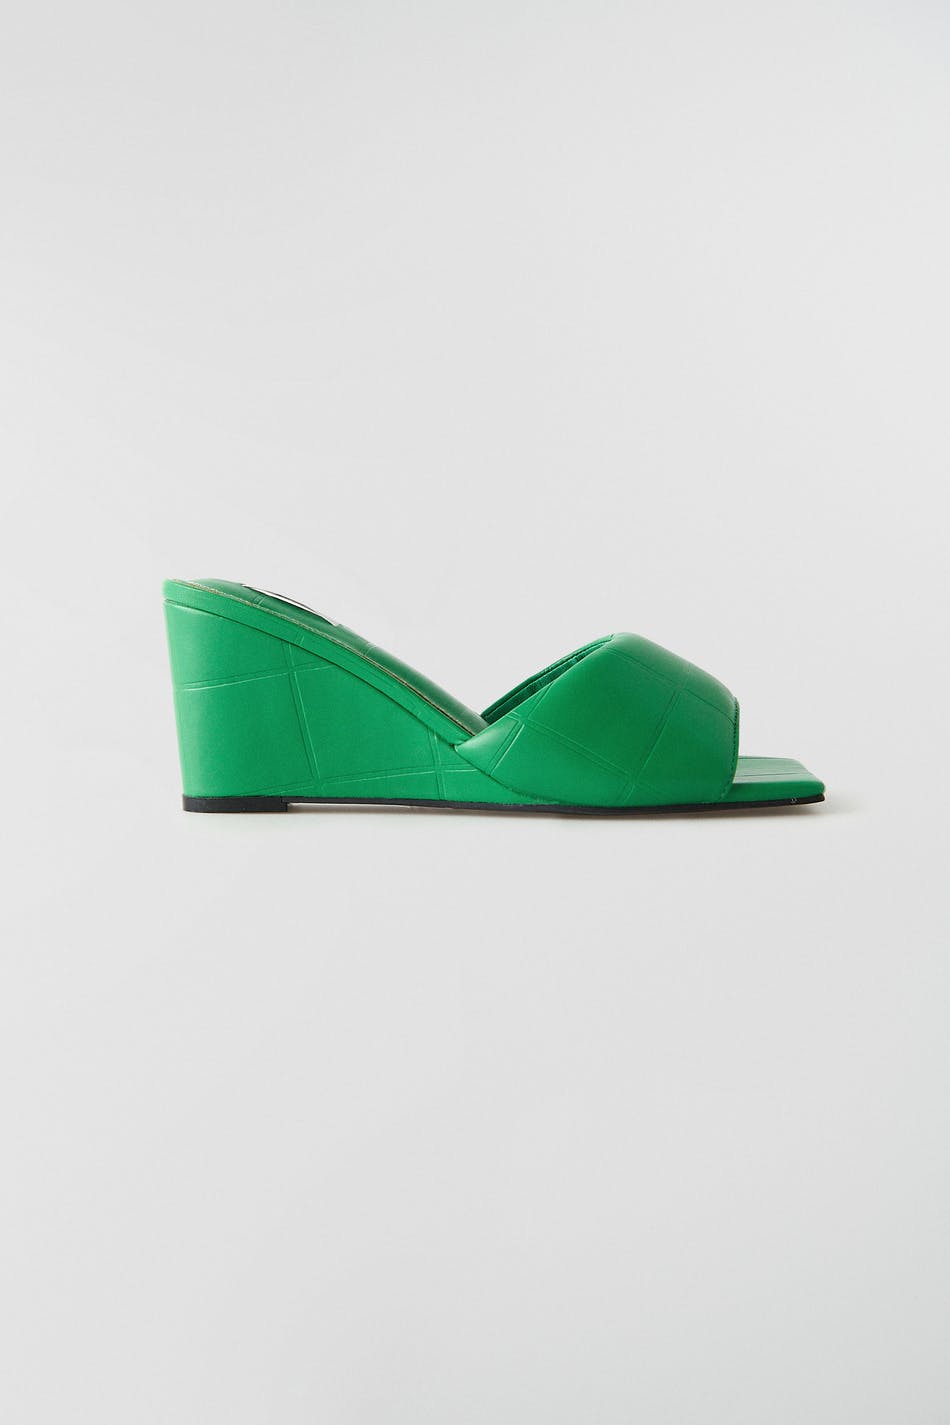 Gina Tricot - Mira high heel sandals